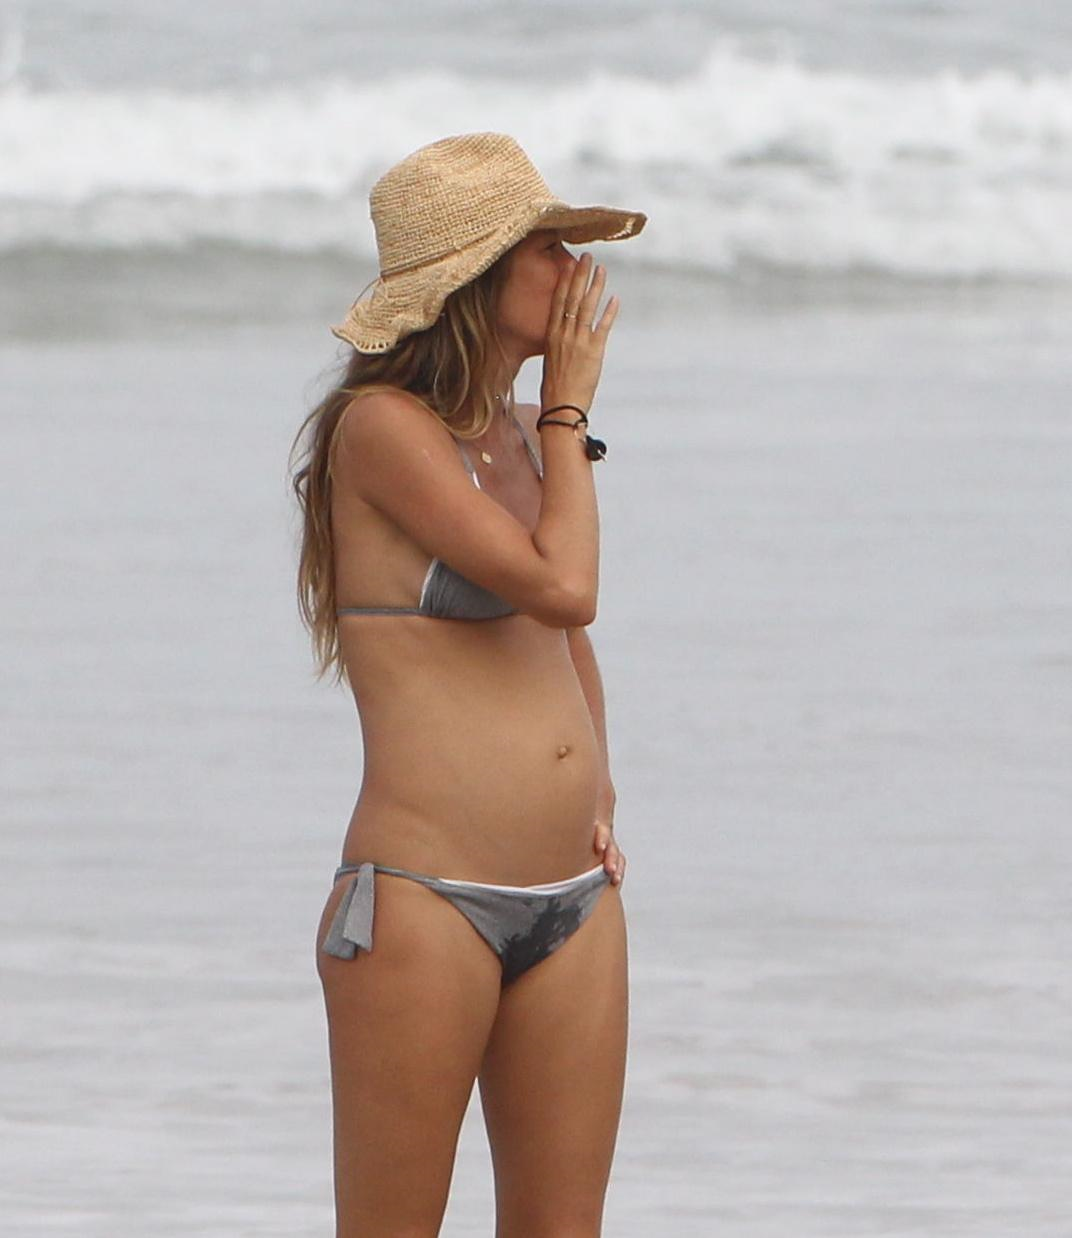 A pregnant Gisele Bundchen walking on the beach in Costa Rica - July 23, 20...